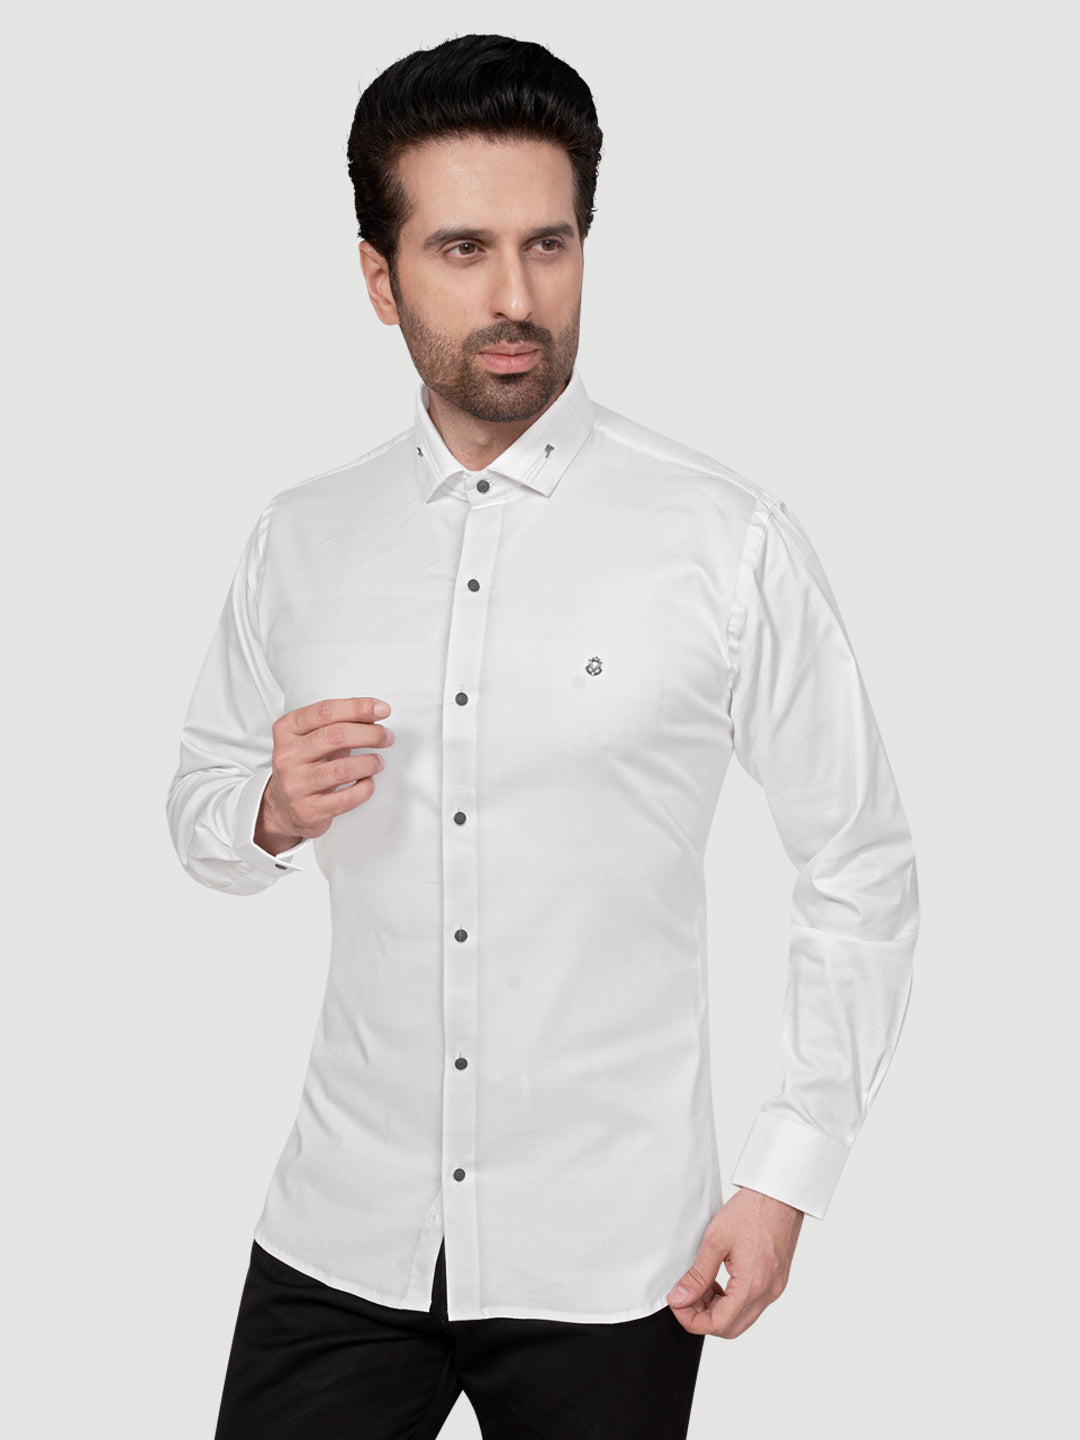 Black and White Men's Designer Shirt with Collar Accessory & Designer Broach White